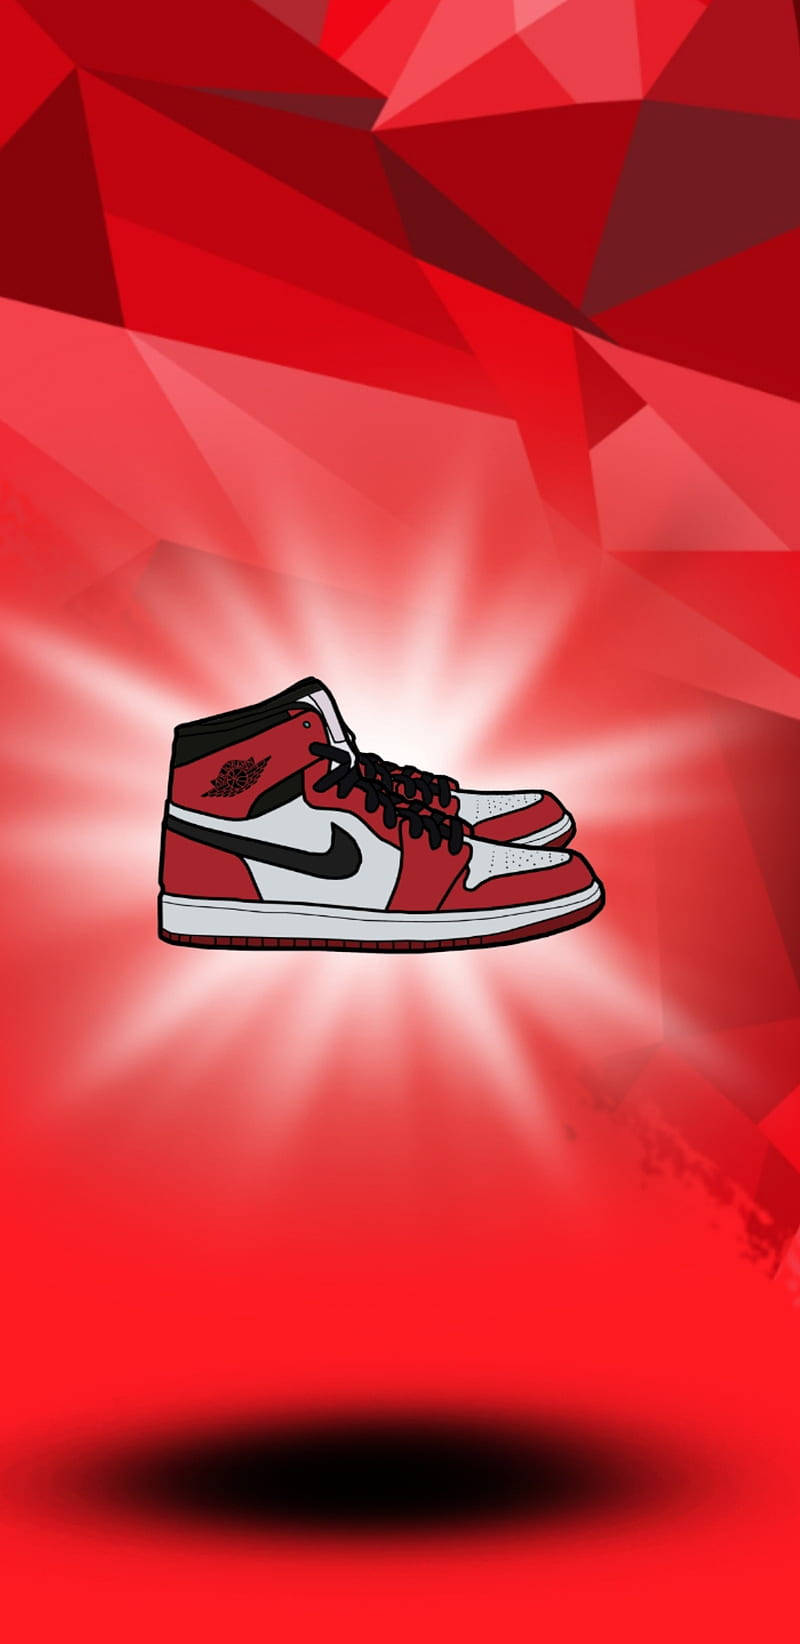 Nike Air Jordan 1 Chicago Red Background